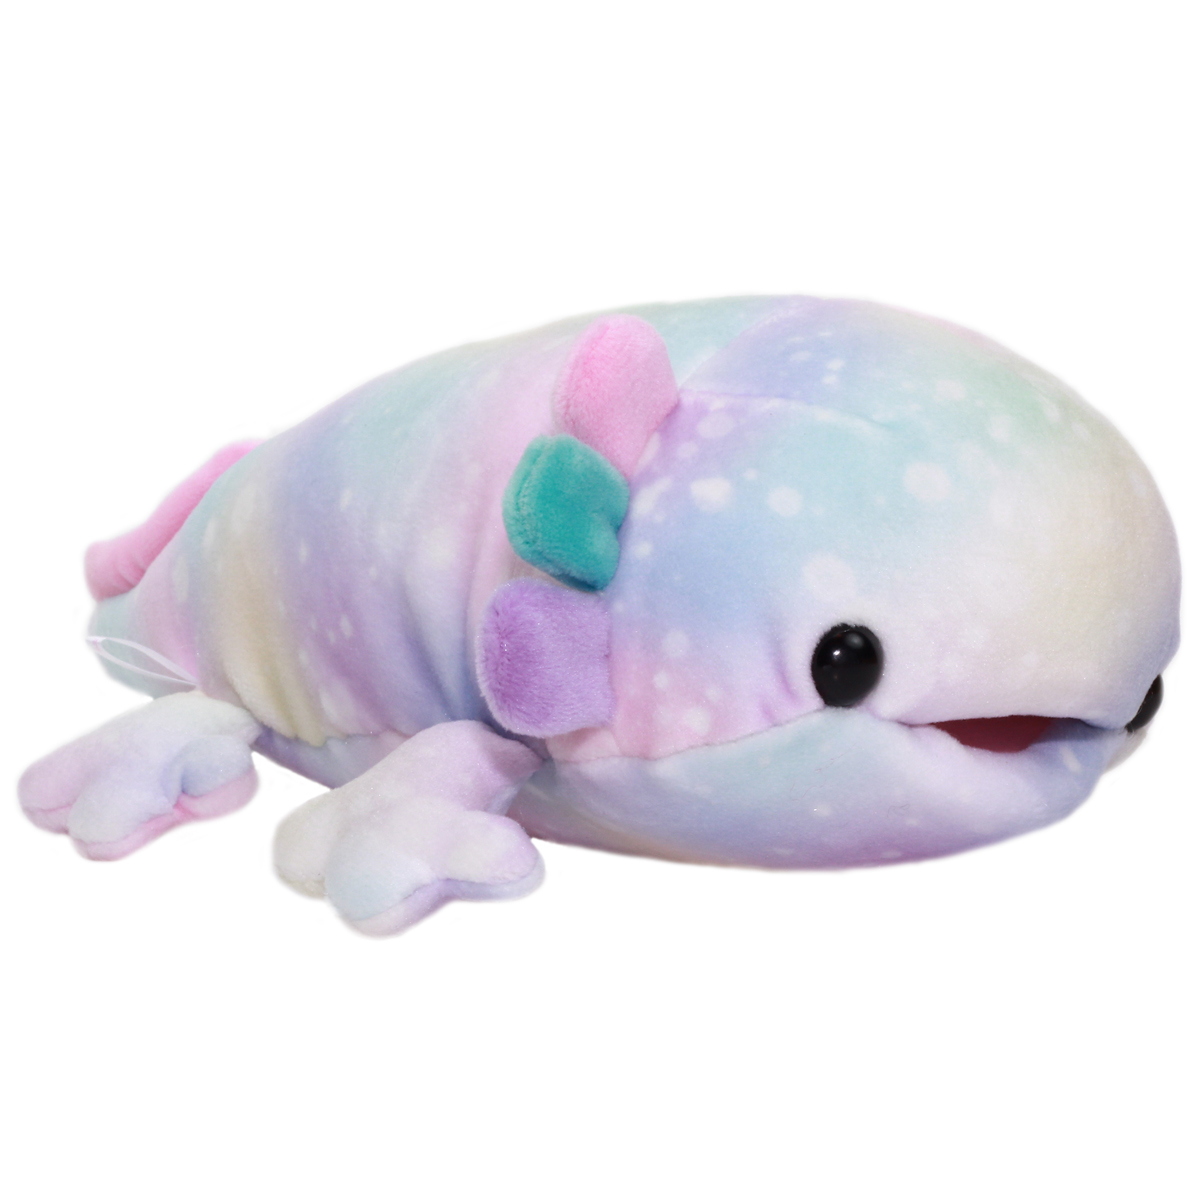 Aquarium Colorful Collection Plush Axolotl Plush Toy Purple 9 Inches